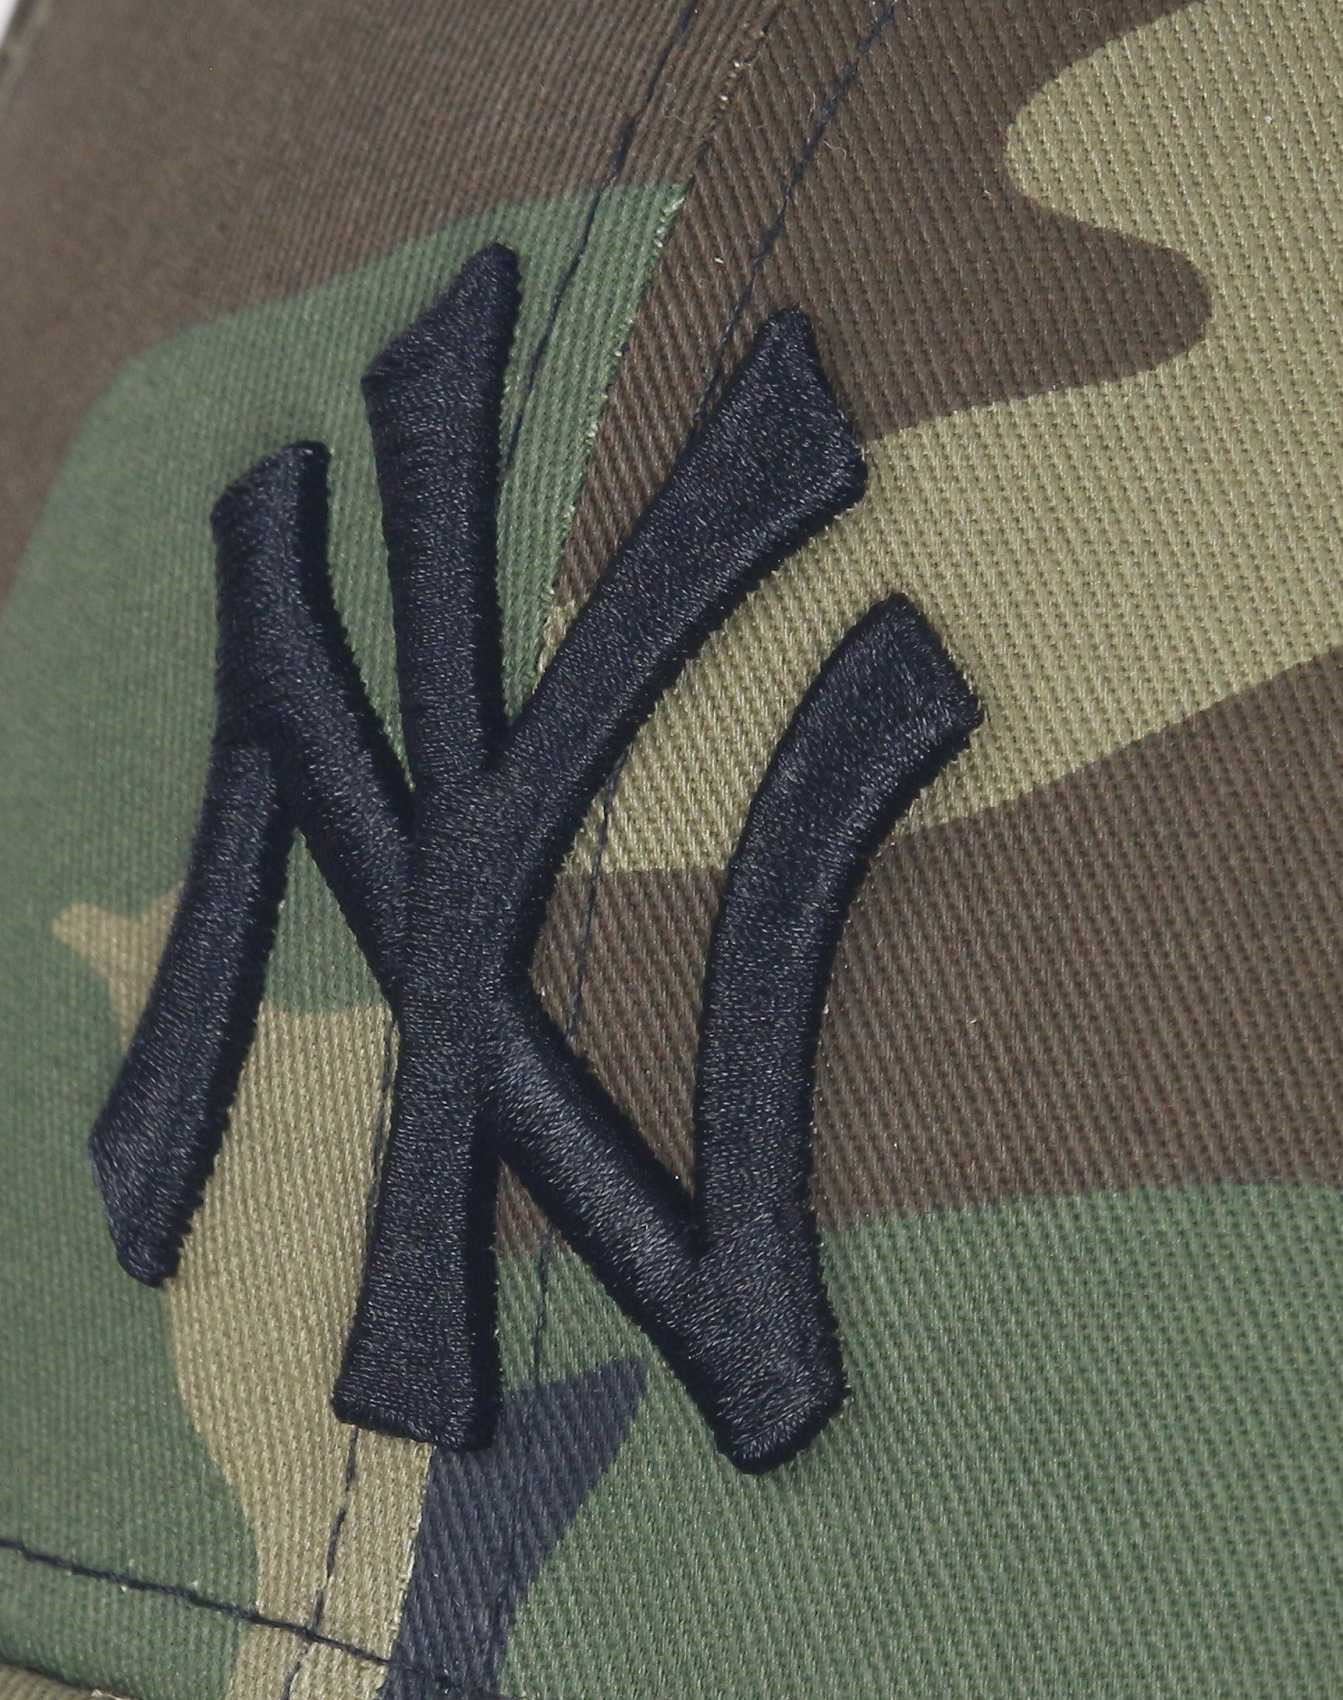 New York Yankees MLB Essential Camo 9Forty Adjustable Snapback Cap New Era